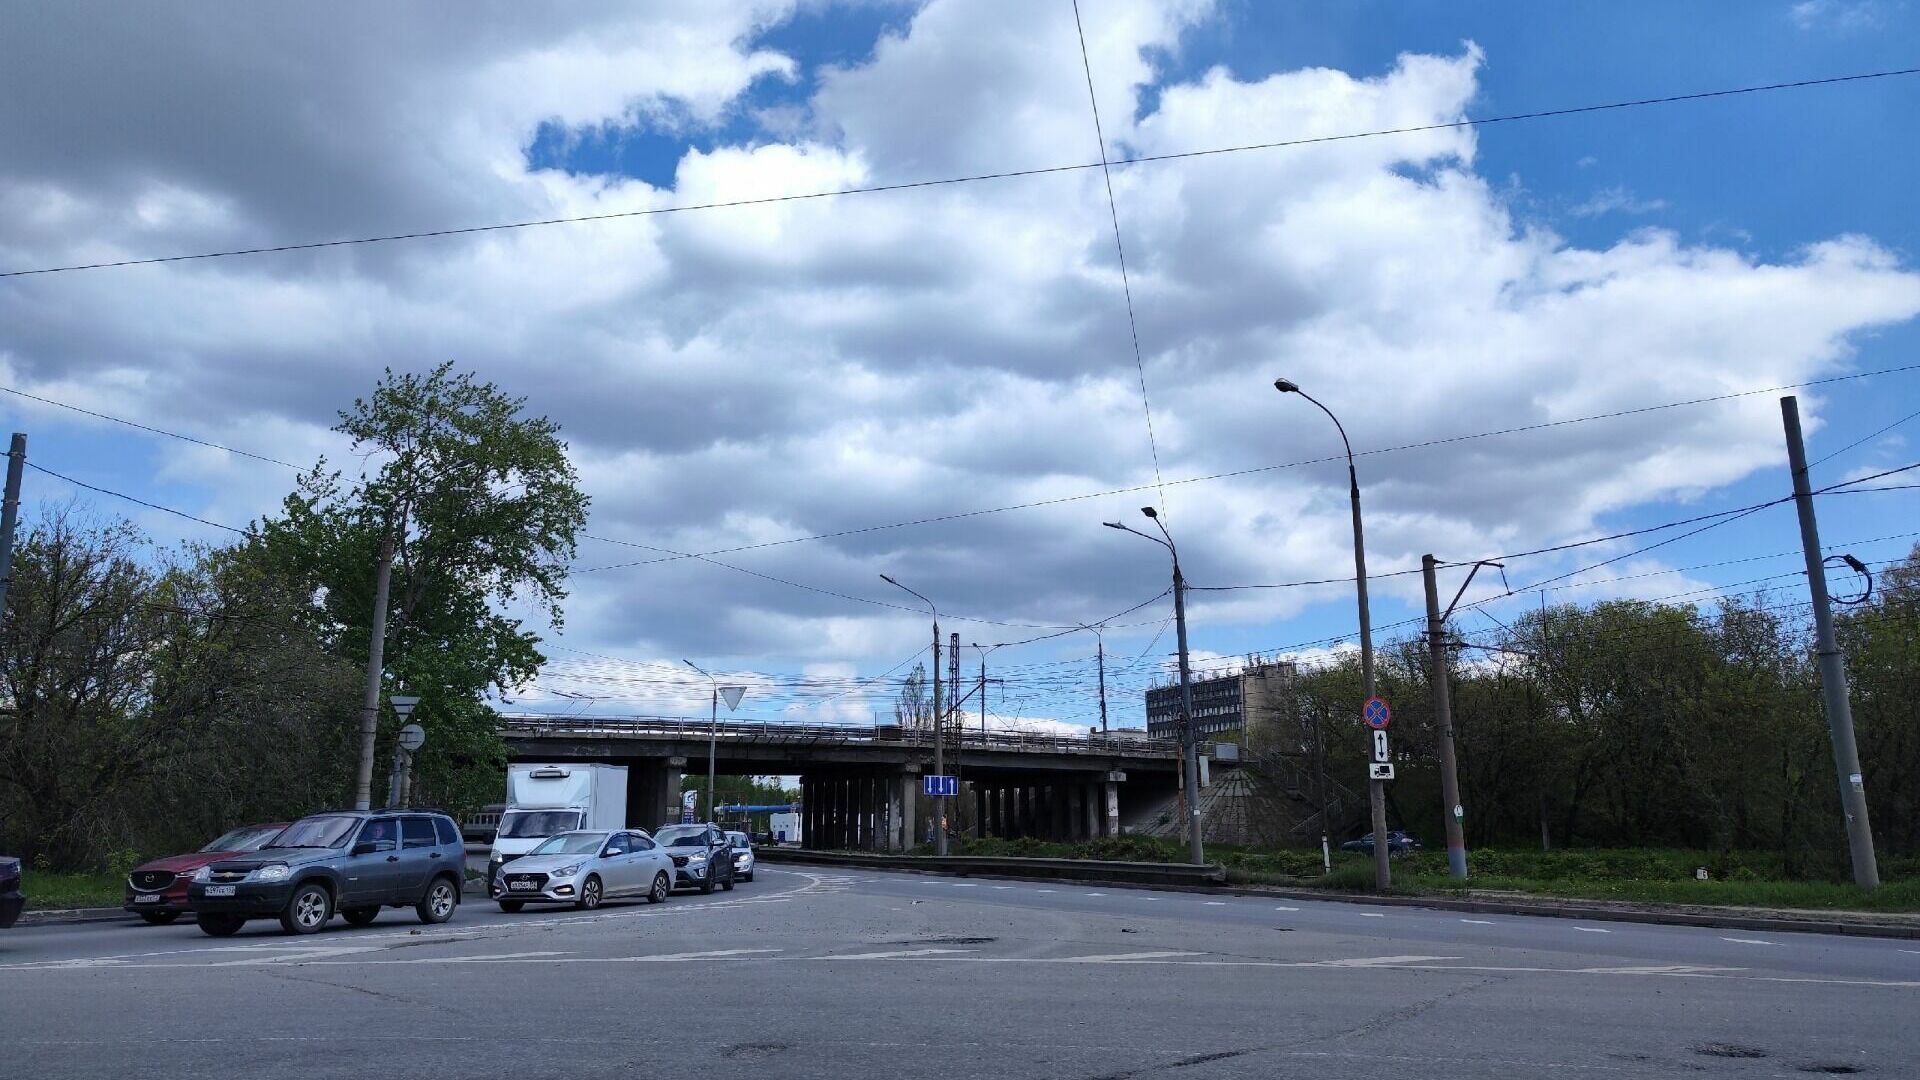 Пробки образовались на Московском шоссе из-за ремонта путепровода